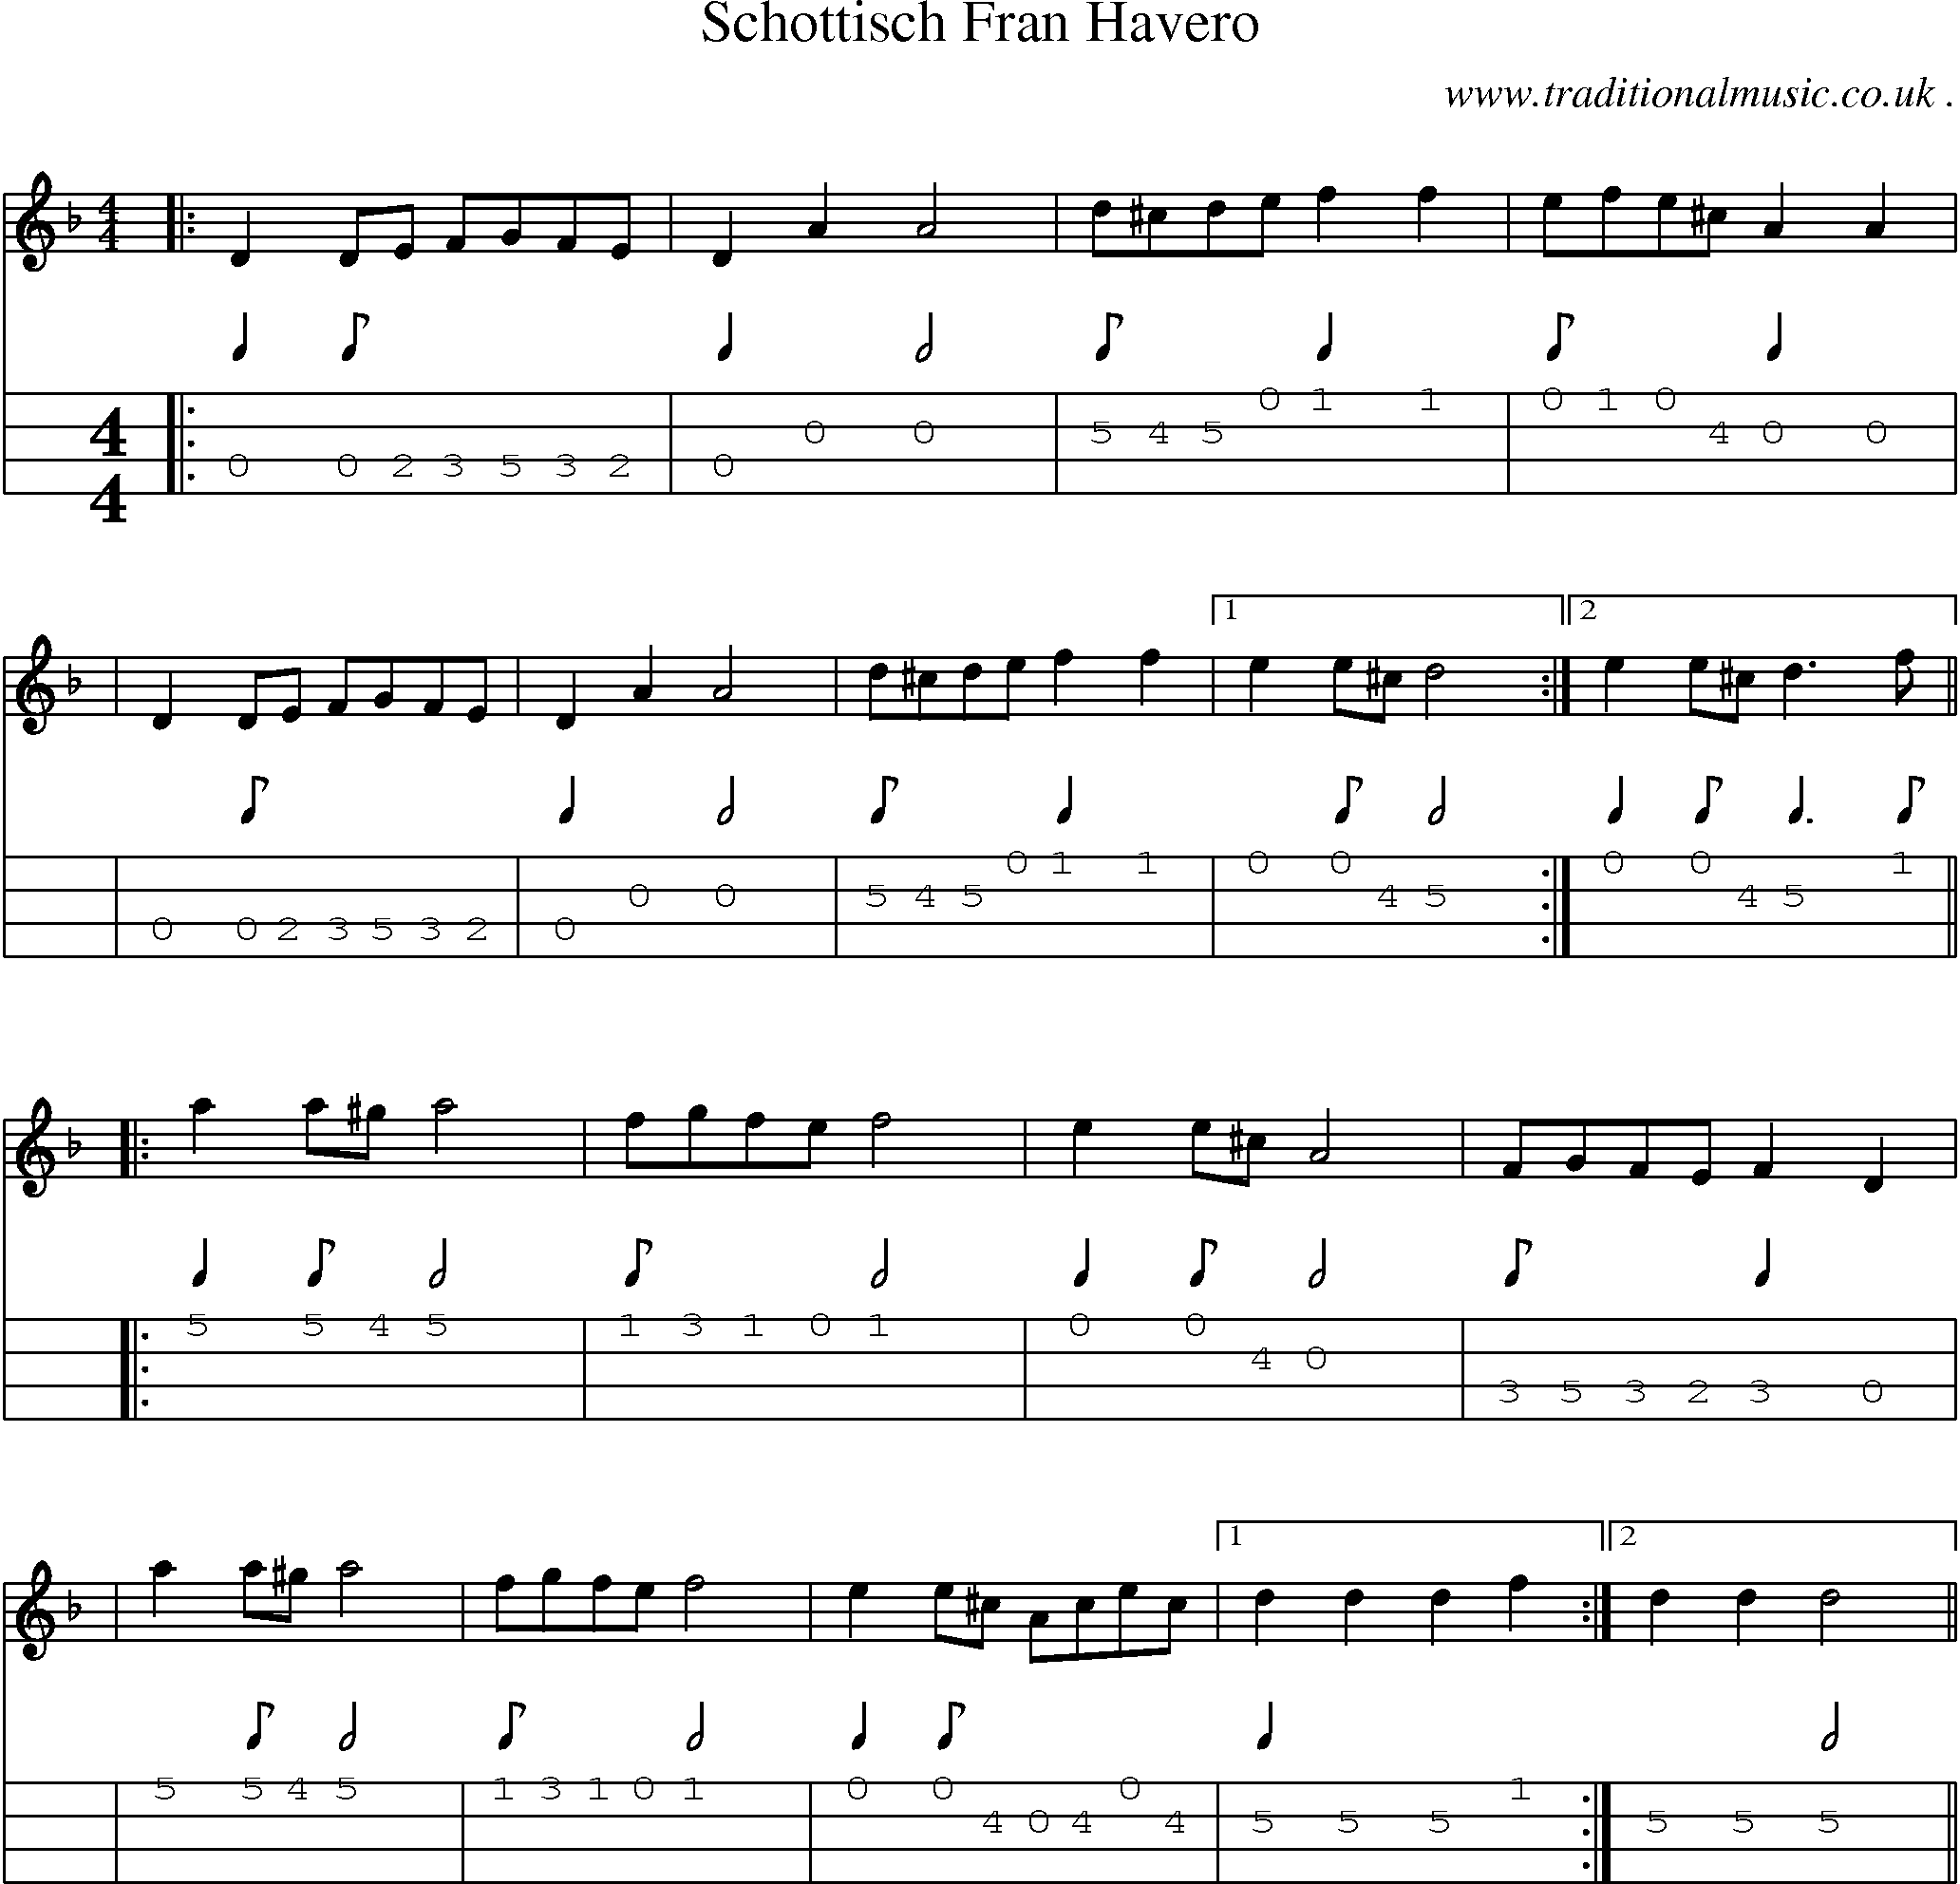 Sheet-Music and Mandolin Tabs for Schottisch Fran Havero